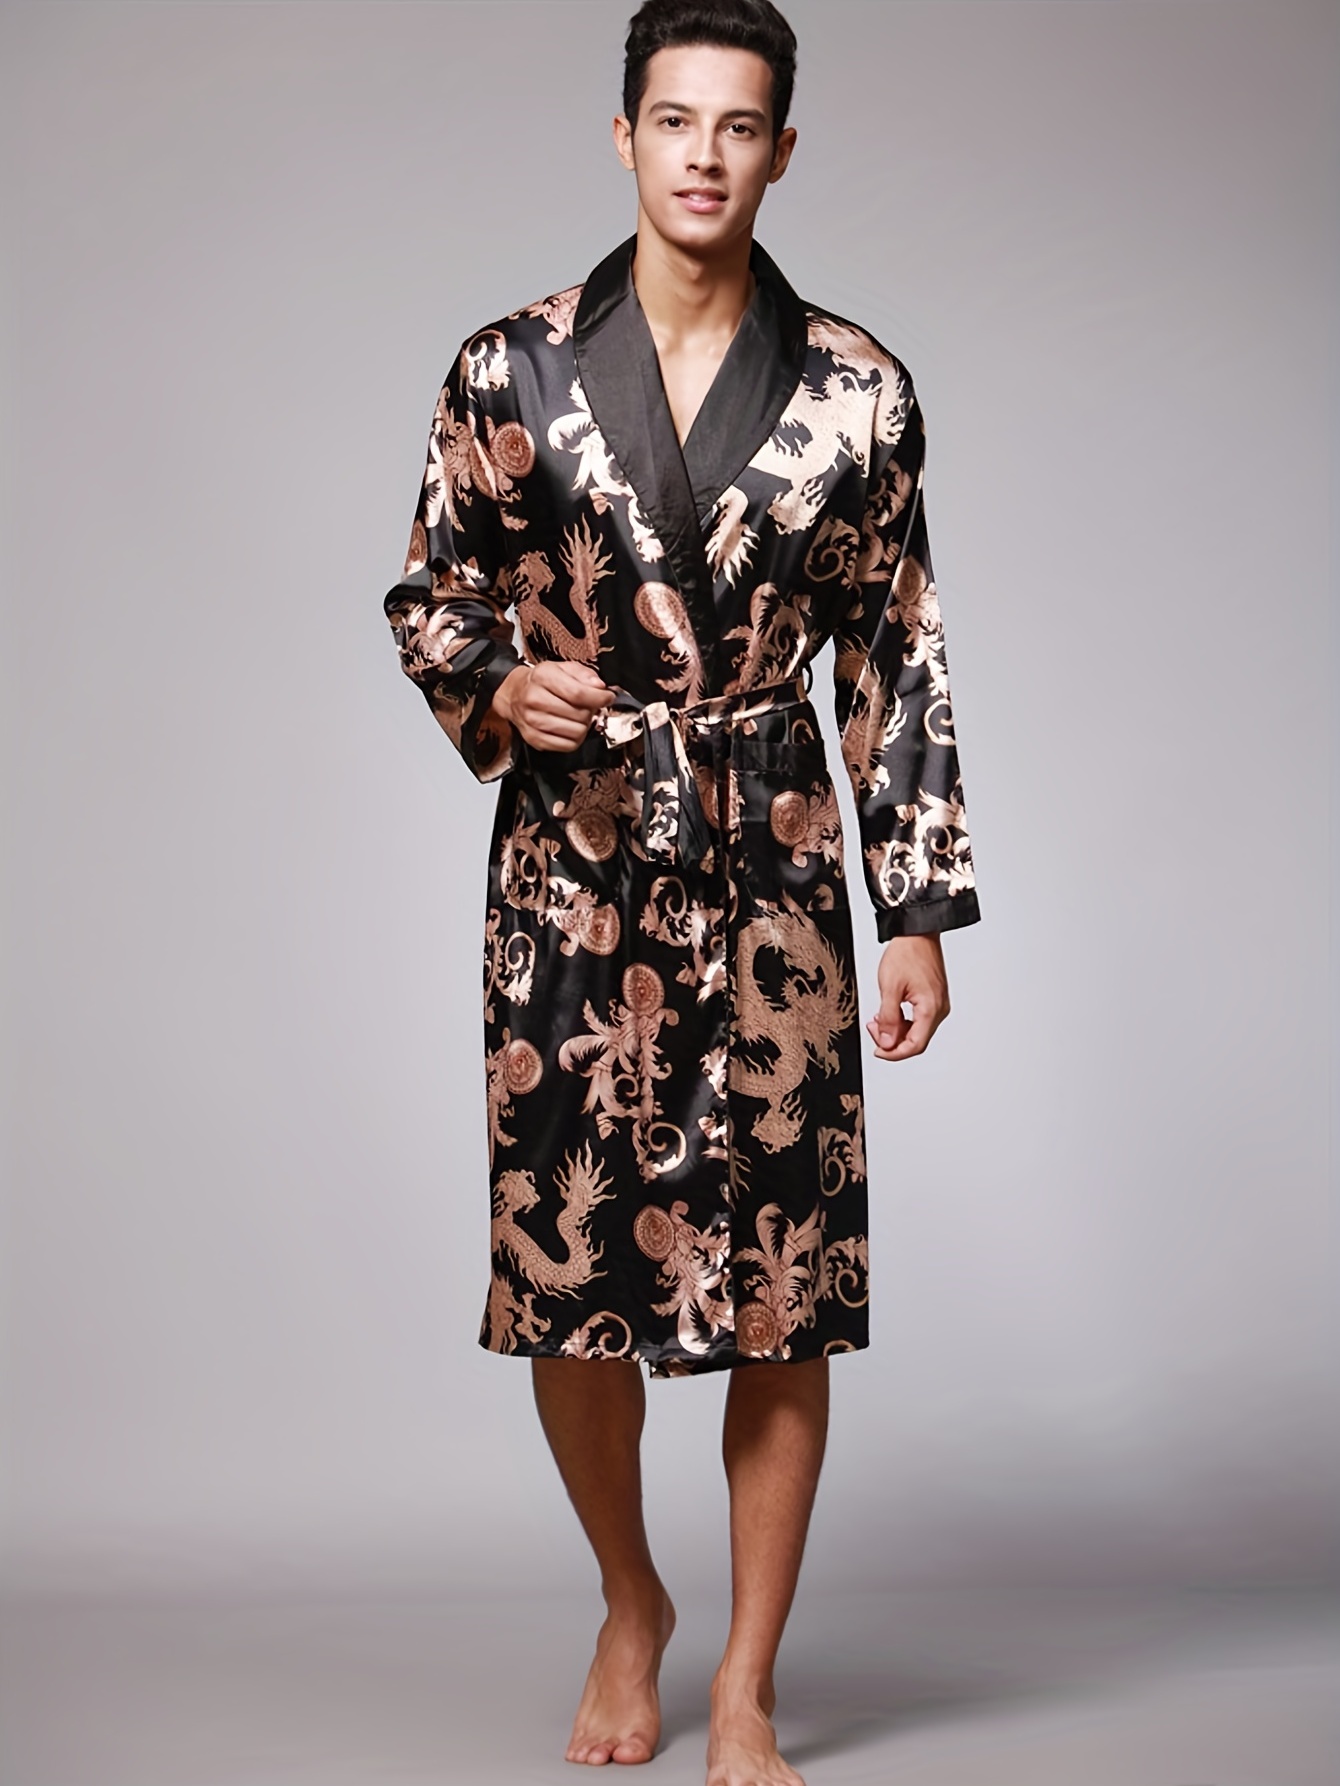 Nantex Mens Solid Color Silk Satin Robe Shorts Nightgown Long Sleeve House  Kimono Luxurious Bathrobe - Buy Silk Satin Robe For Men,Men Silk Robe,Men